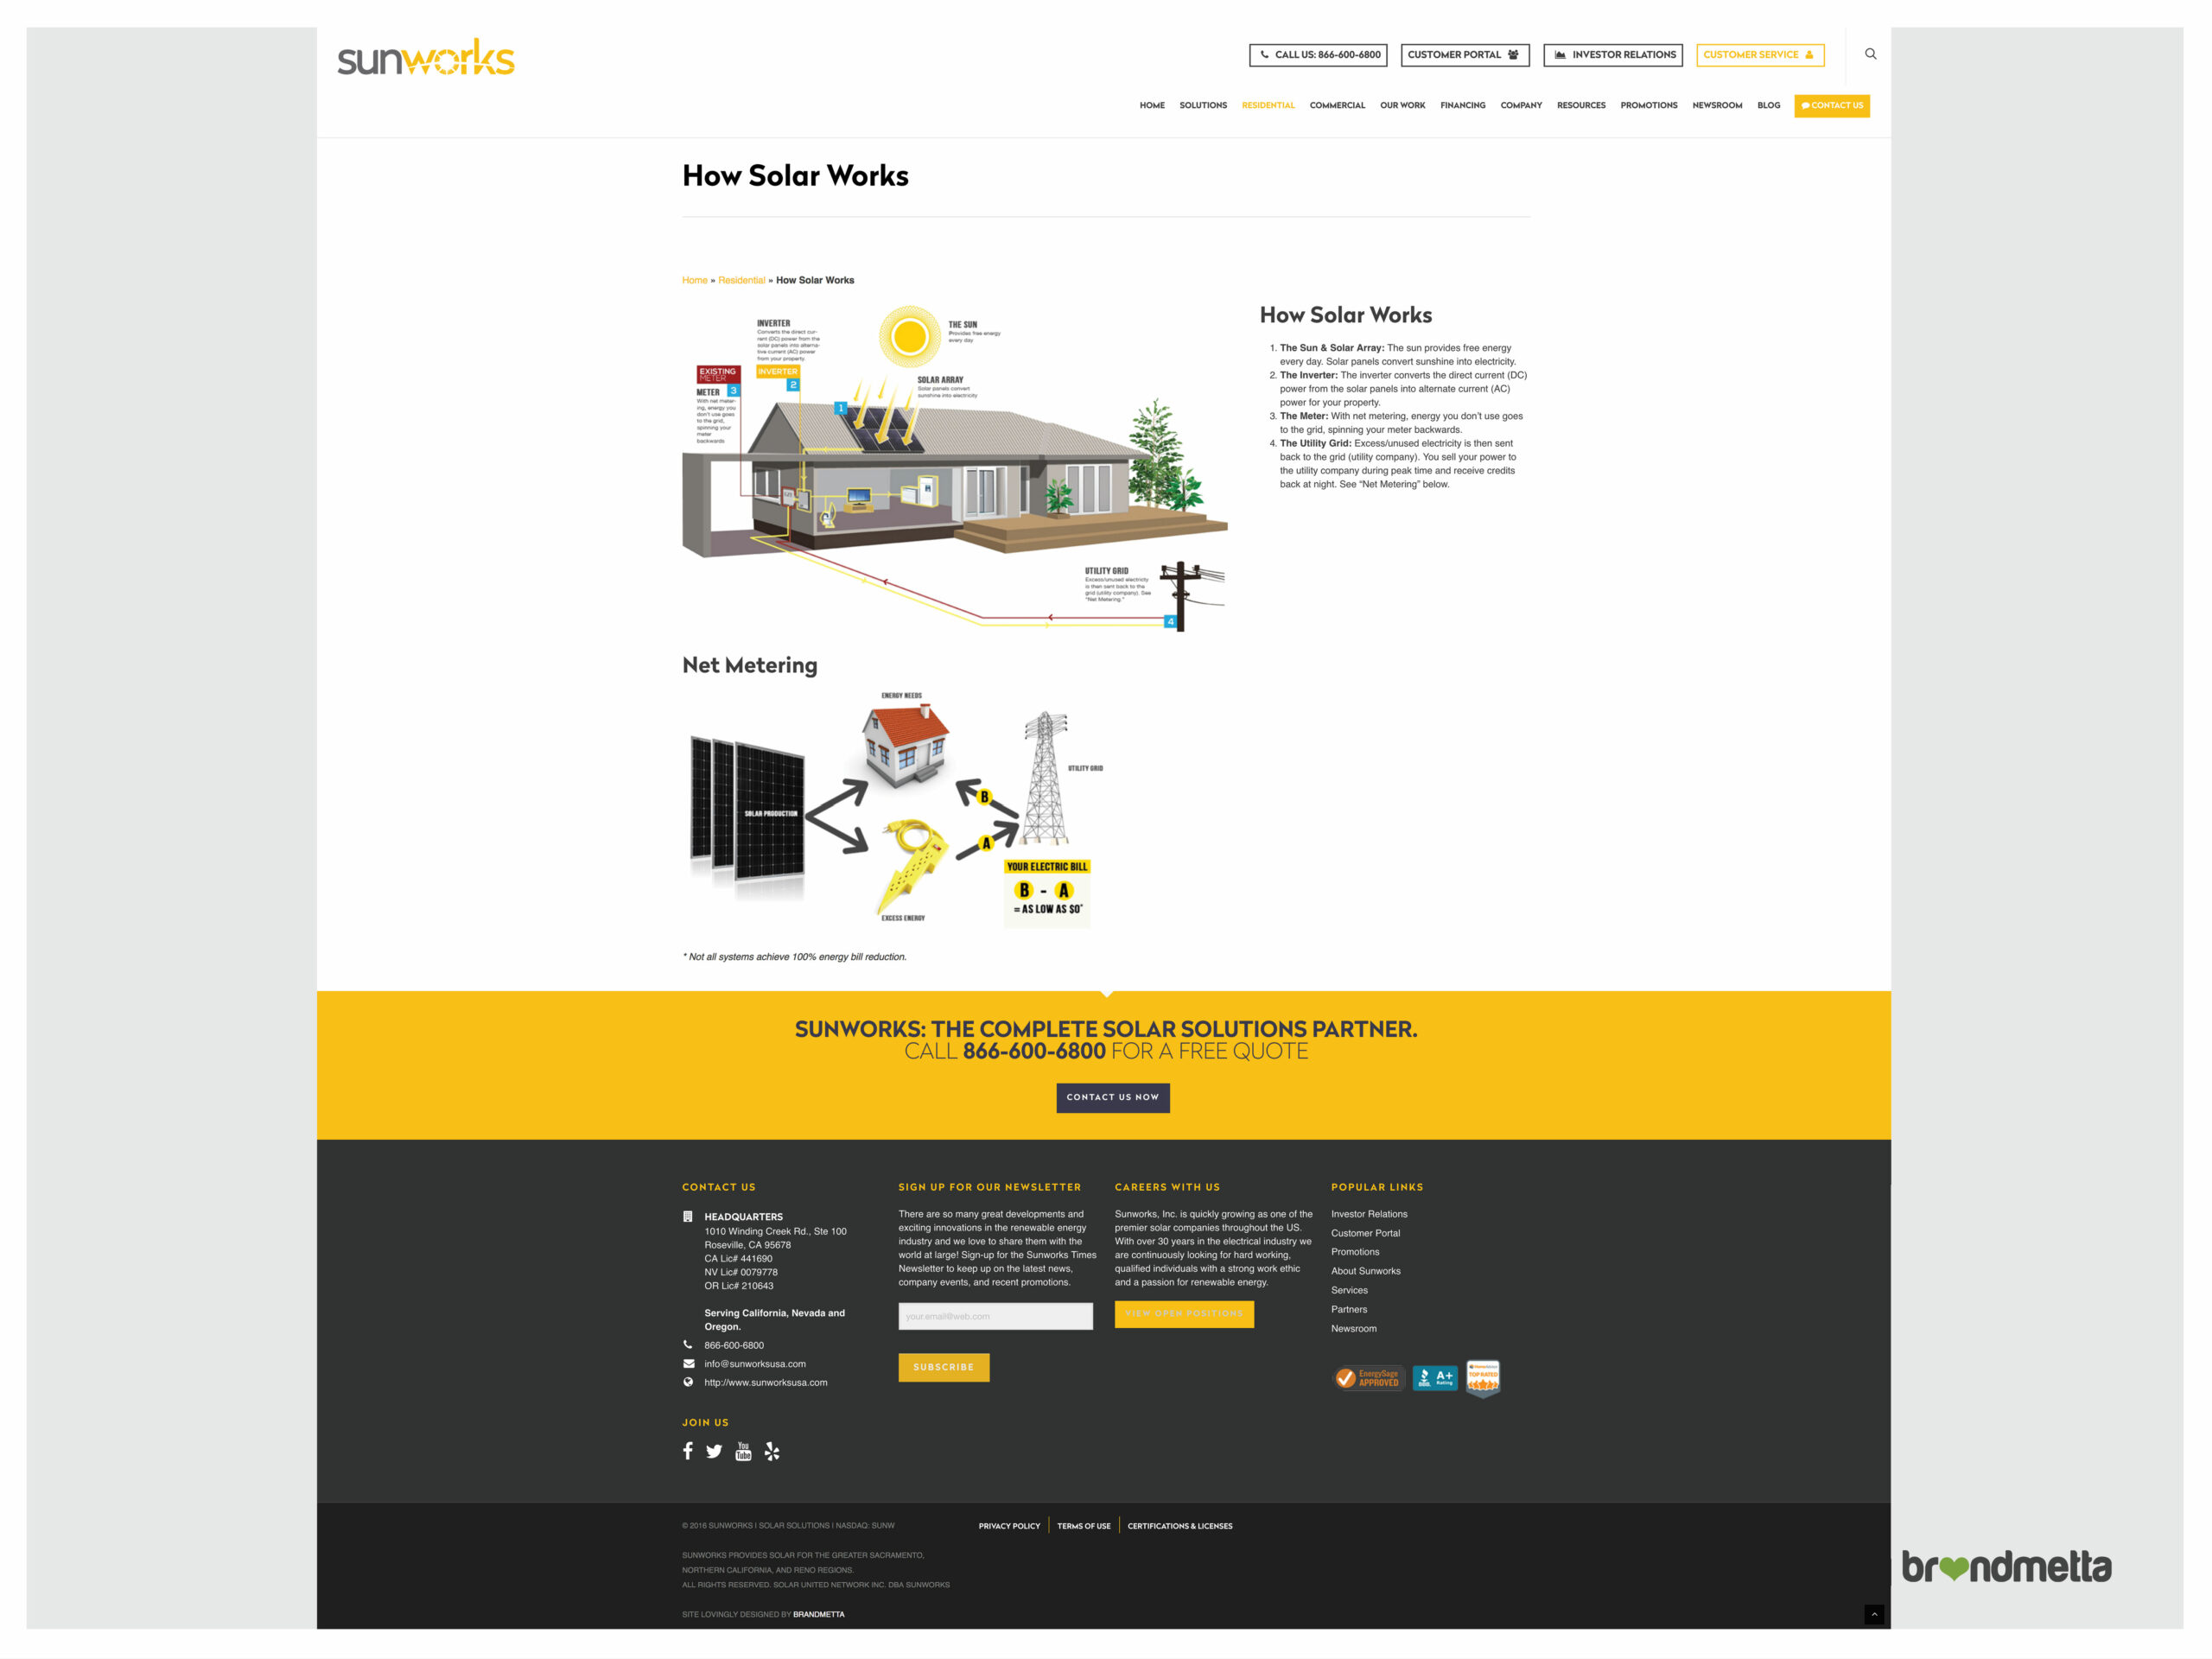 brandmetta-portfolio-website-comparisons-sunworks-5